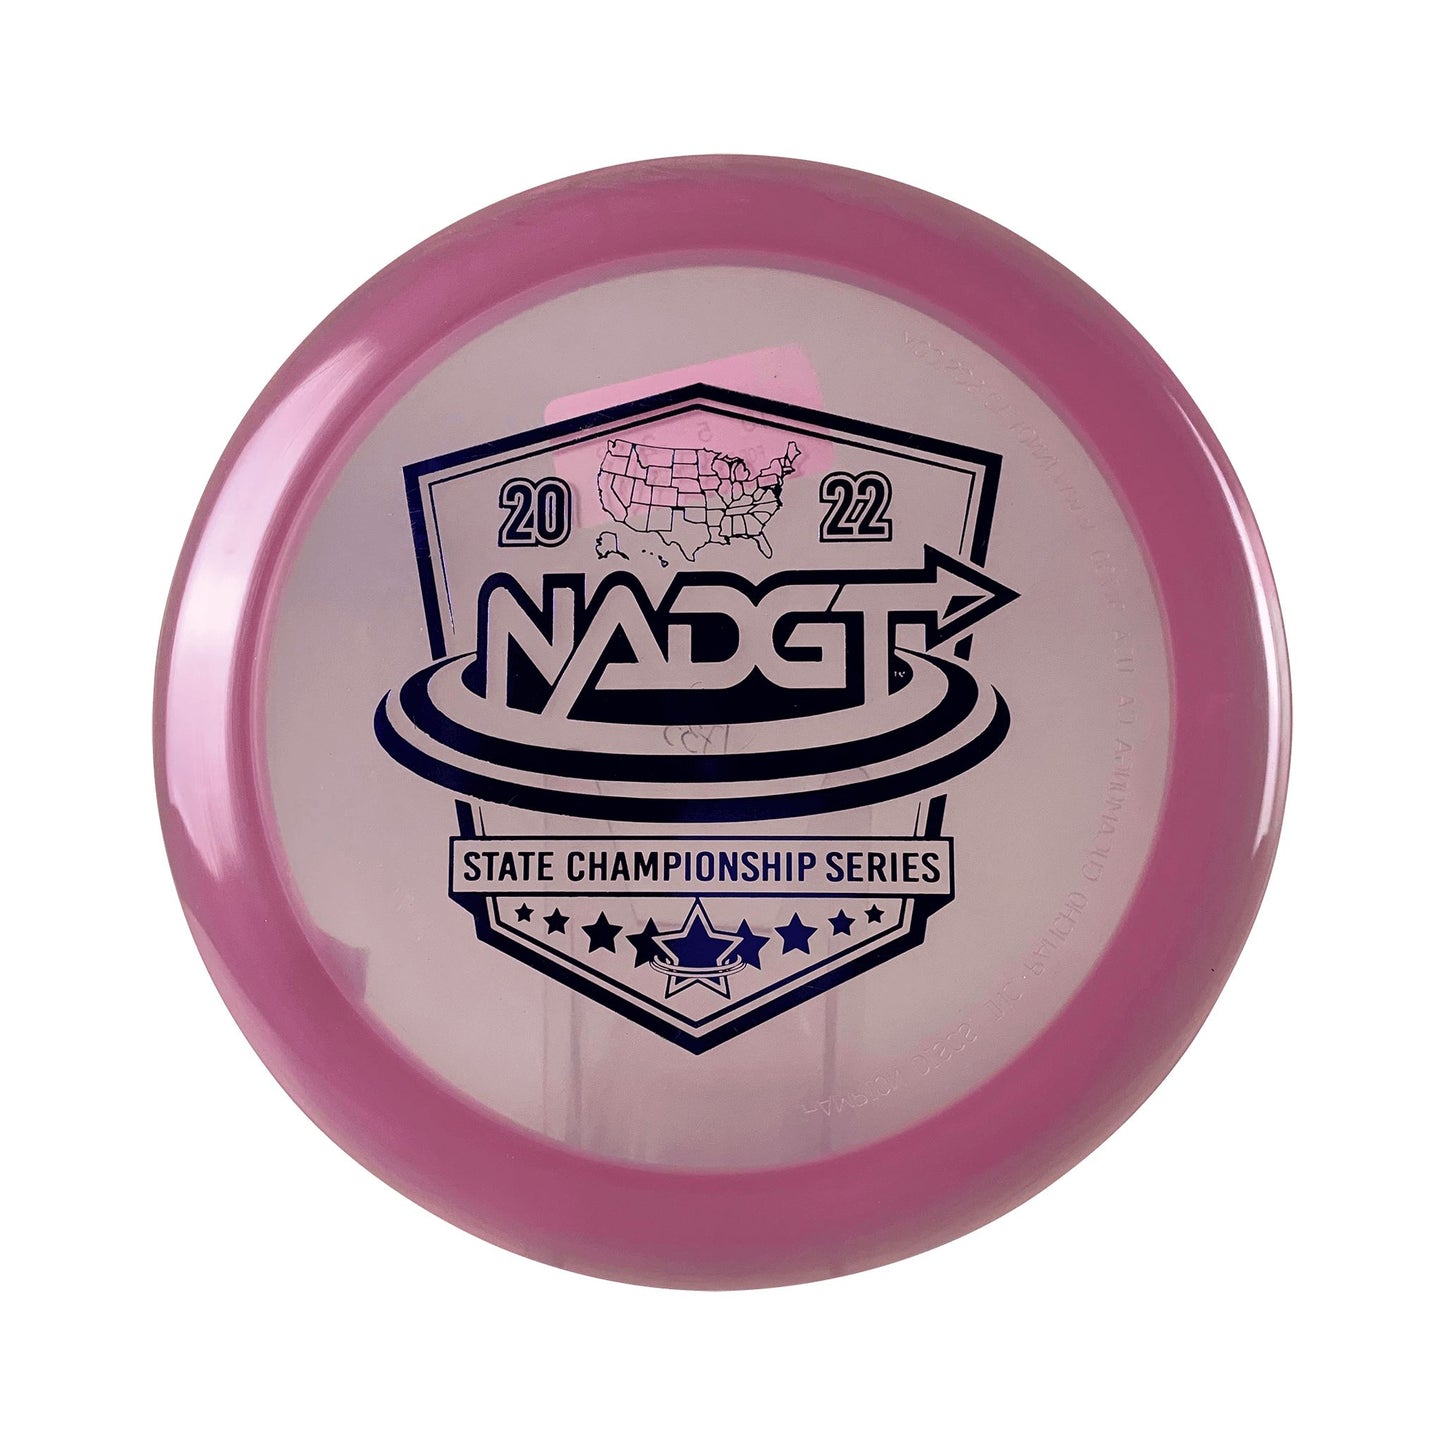 Champion Beast - NADGT State Series 2022 Disc Innova purple 167 